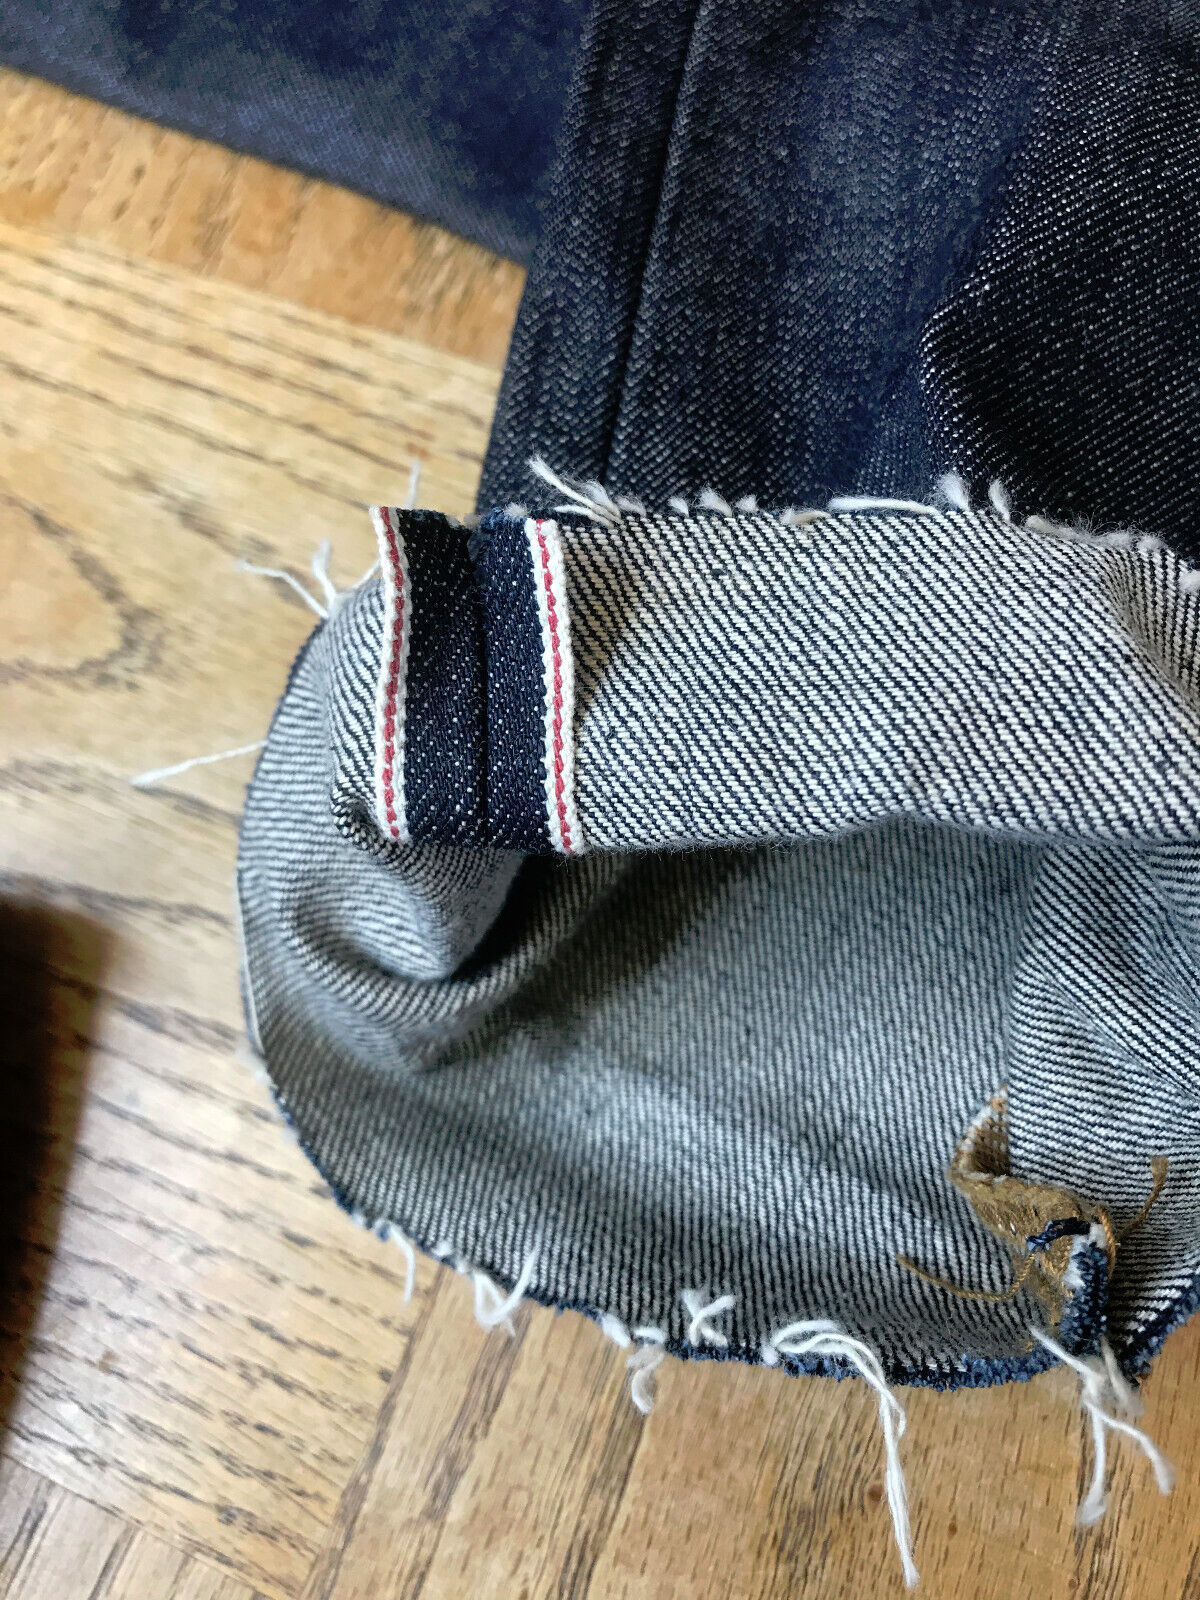 GAP 1969 Japanese Selvedge Denim Jeans unwashed 31x26 Trimmed Pant Legs